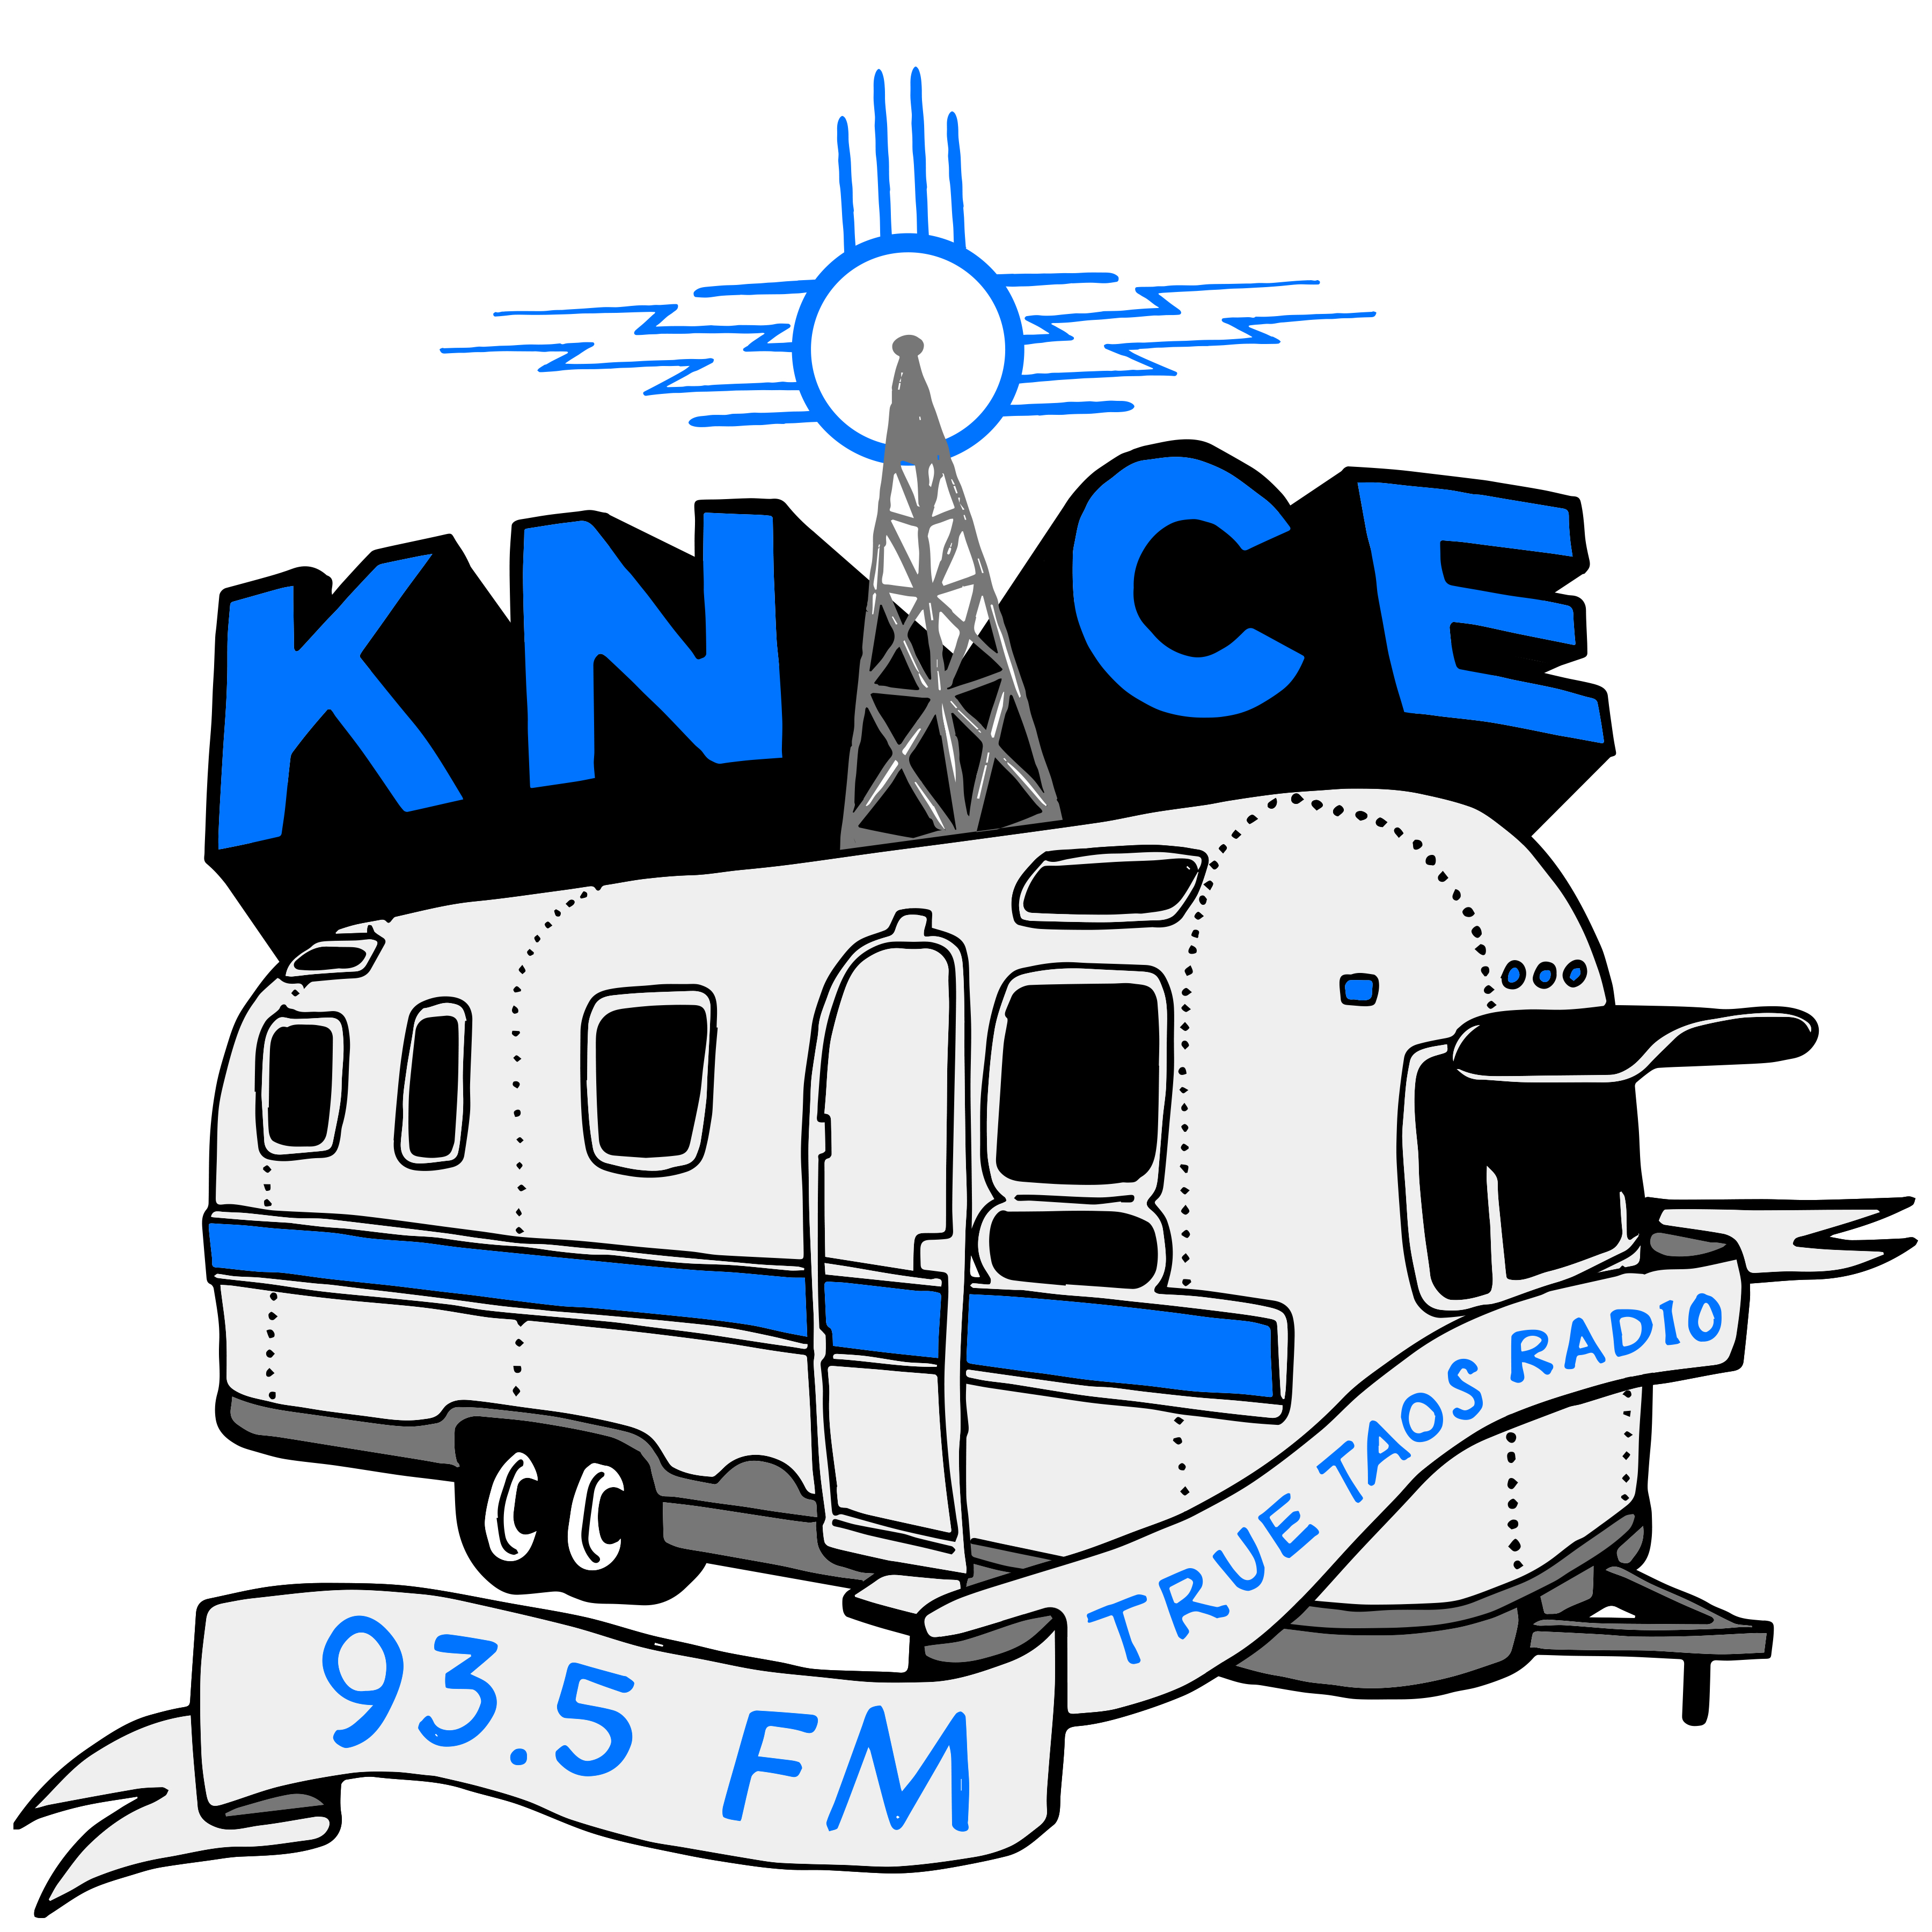 KNCE Taos 93.5FM